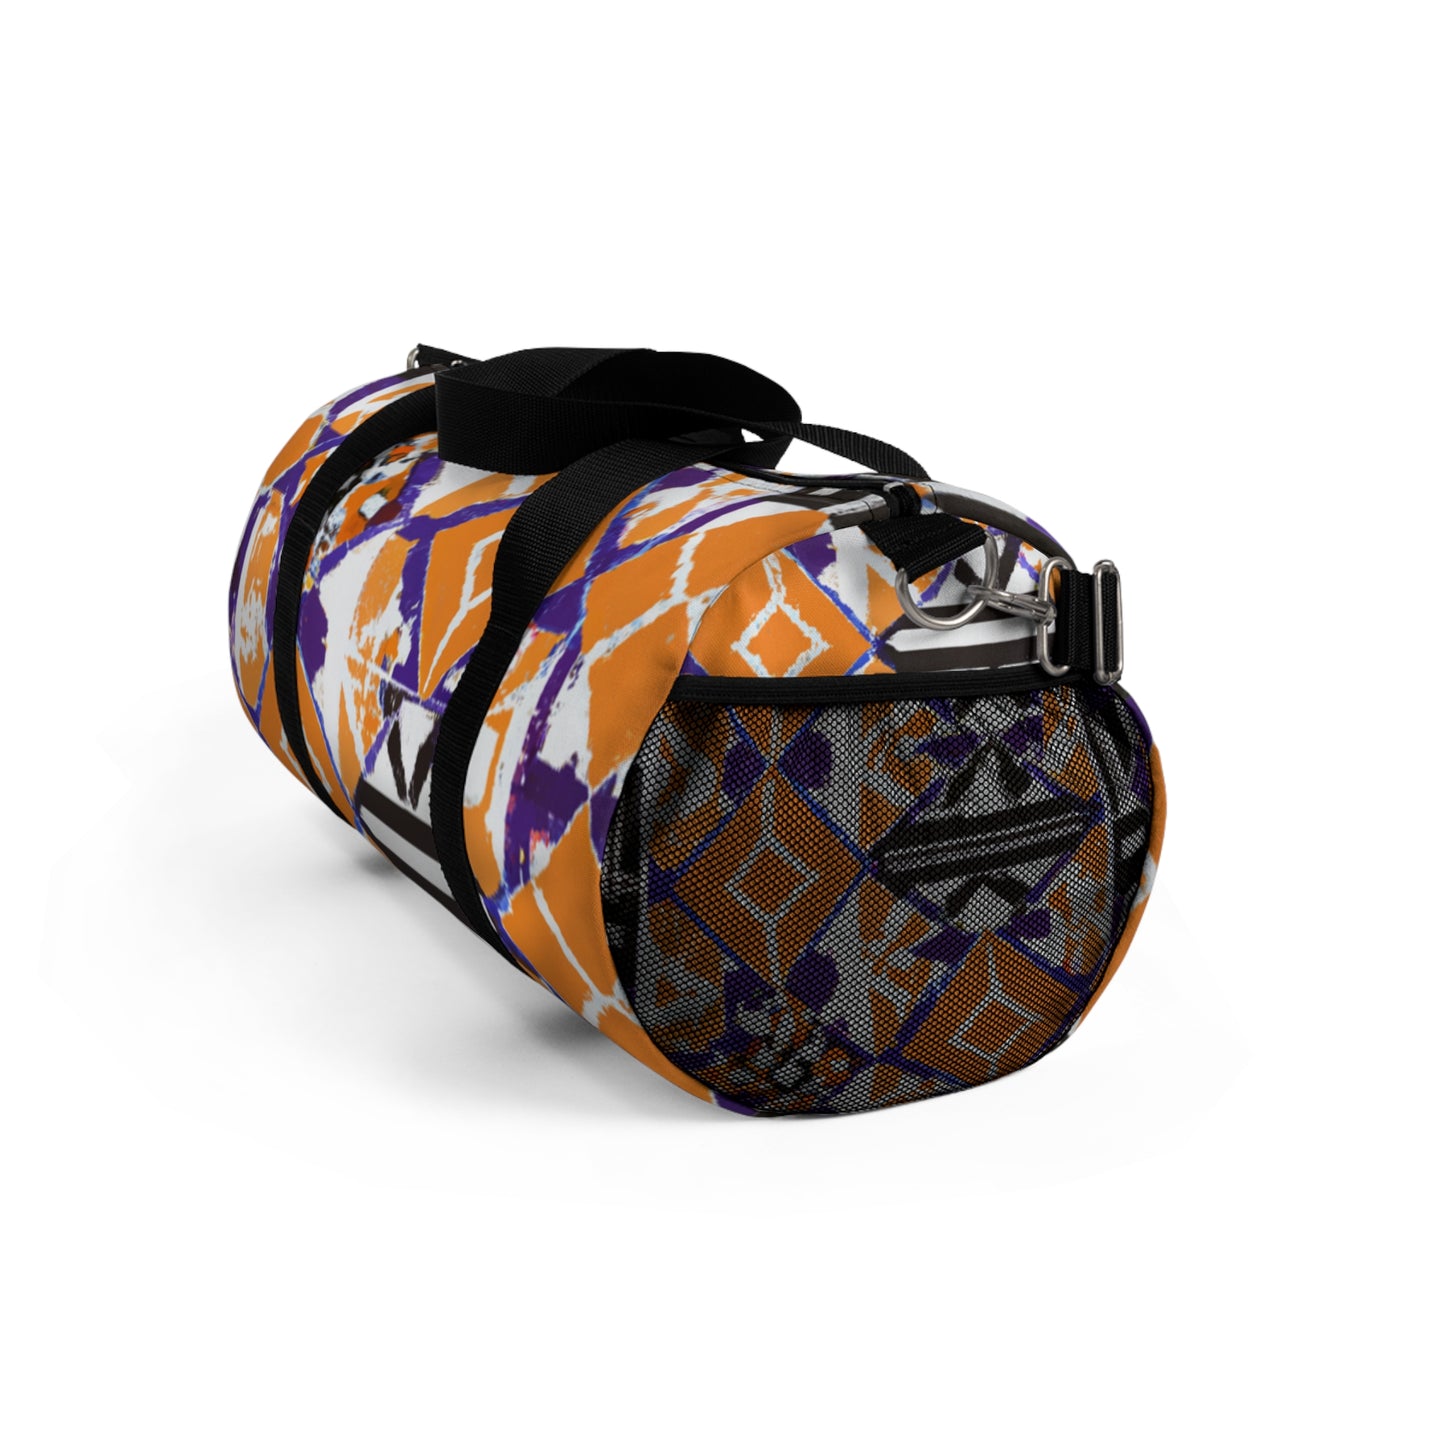 Jules de Fermaton - Geometric Pattern Duffel Travel Gym Luggage Bag